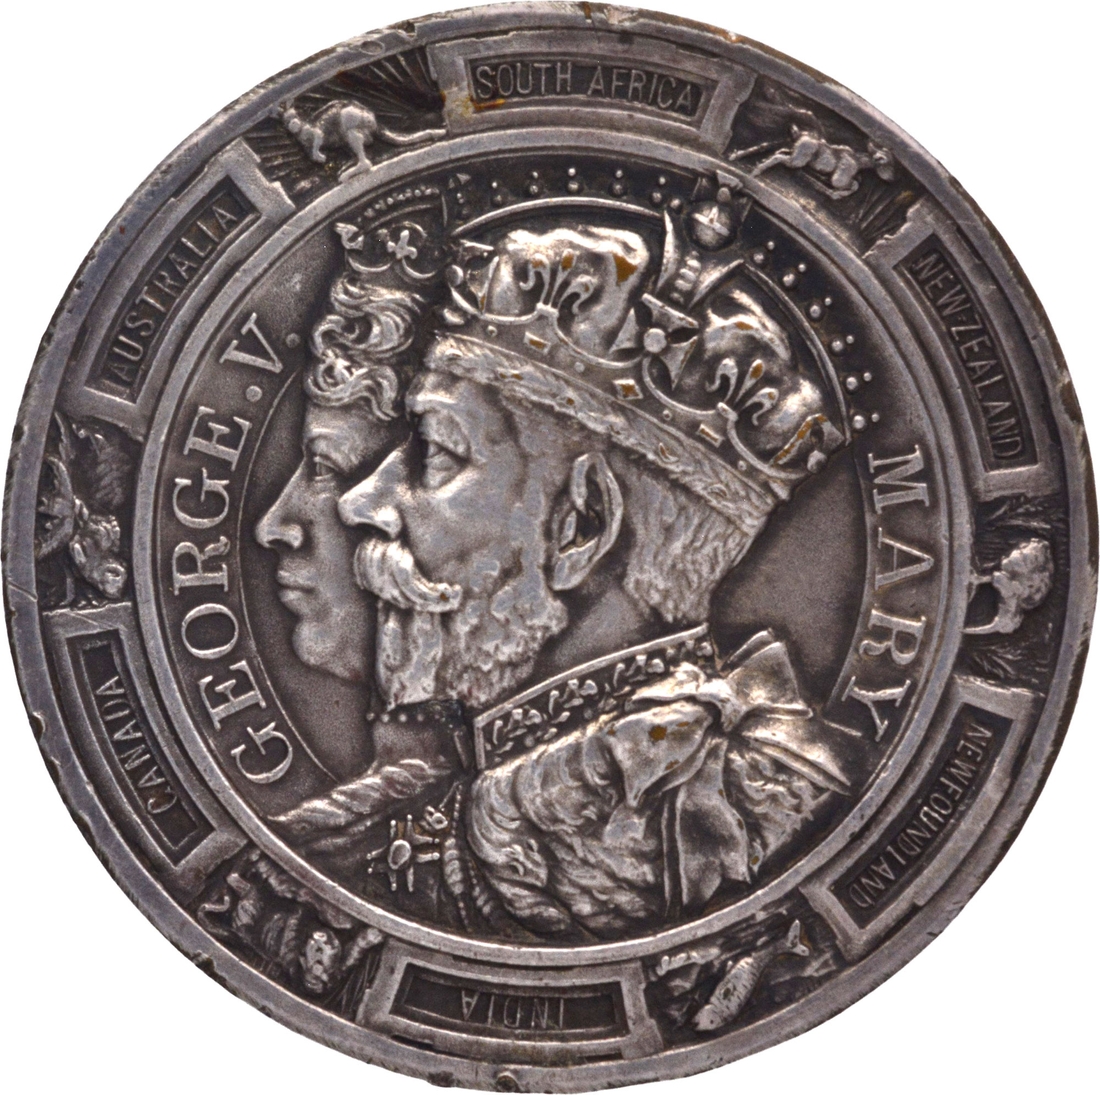 Silver Jubilee Medallion of 1935 of United Kingdom.